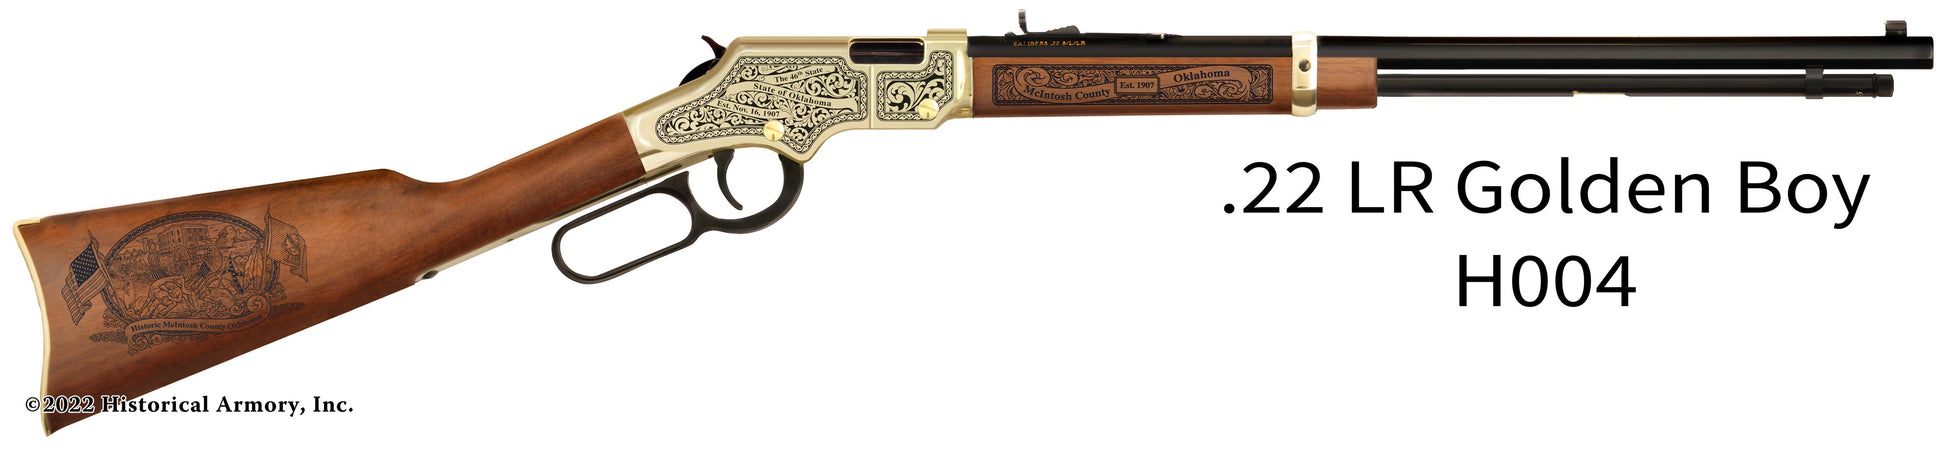 McIntosh County Oklahoma Engraved Henry Golden Boy Rifle